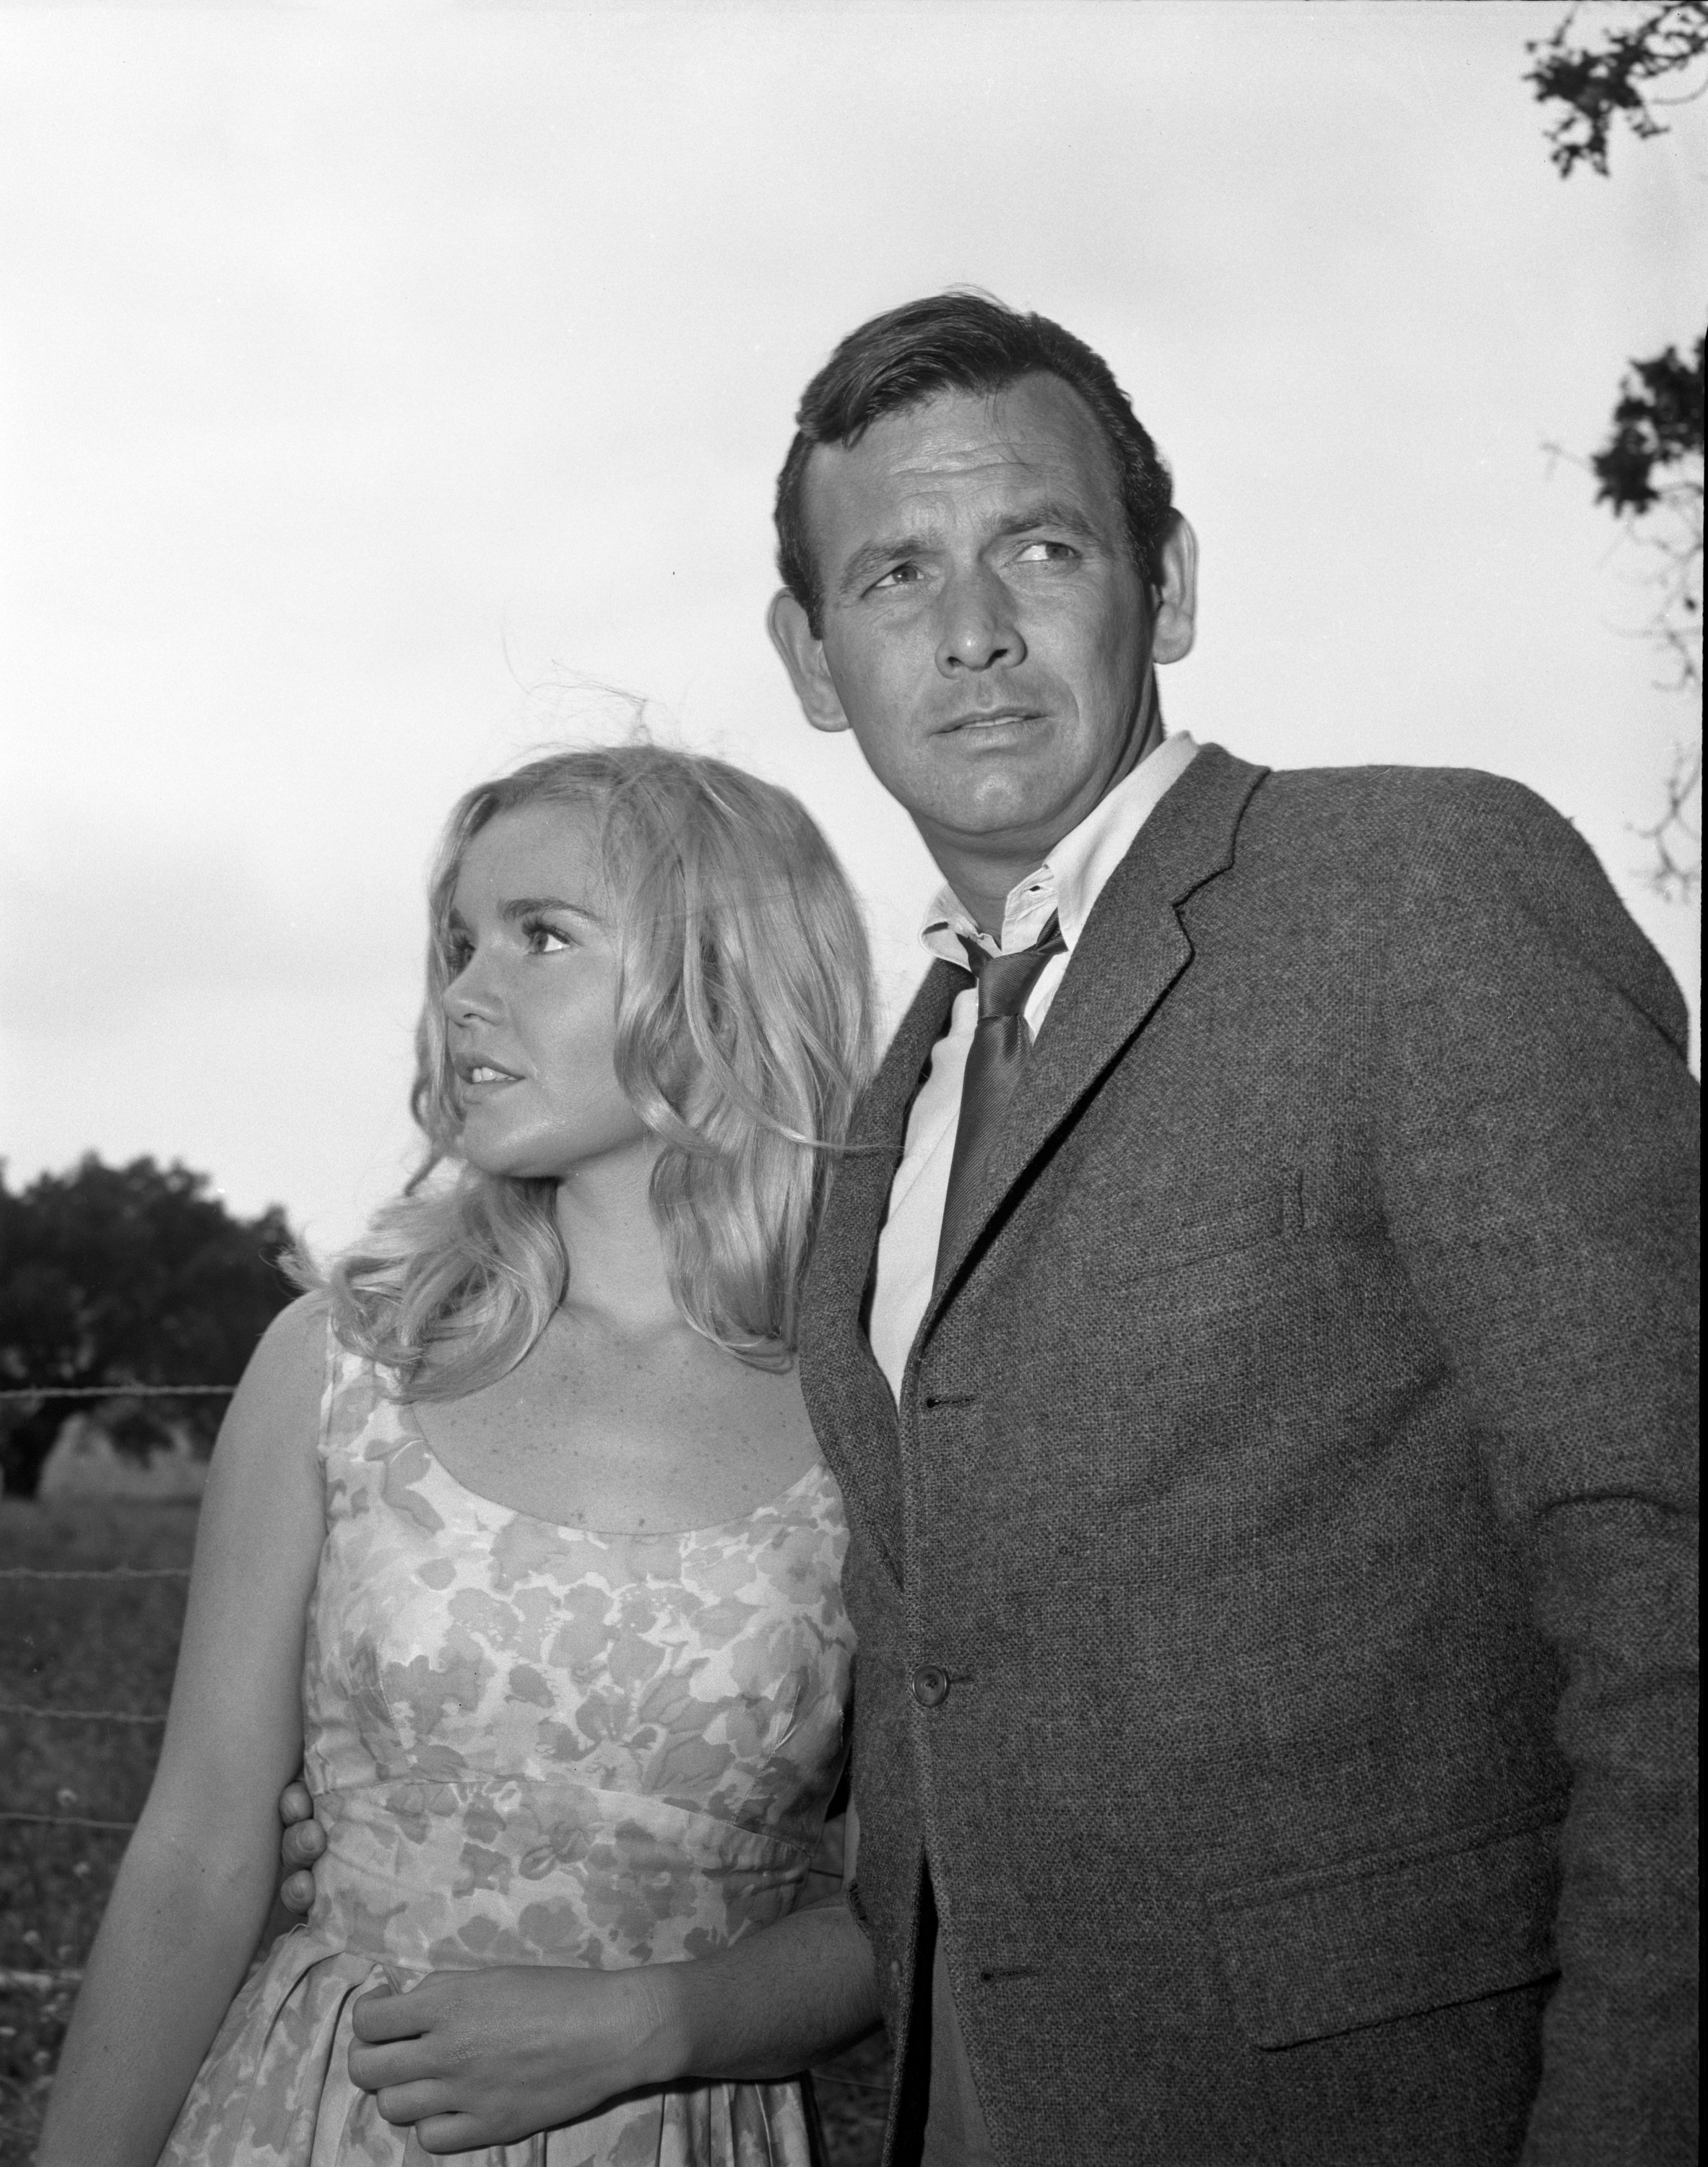 Tuesday Weld with David Janssen in a  1964 episode of "Dark Corner." | Source: Getty Images